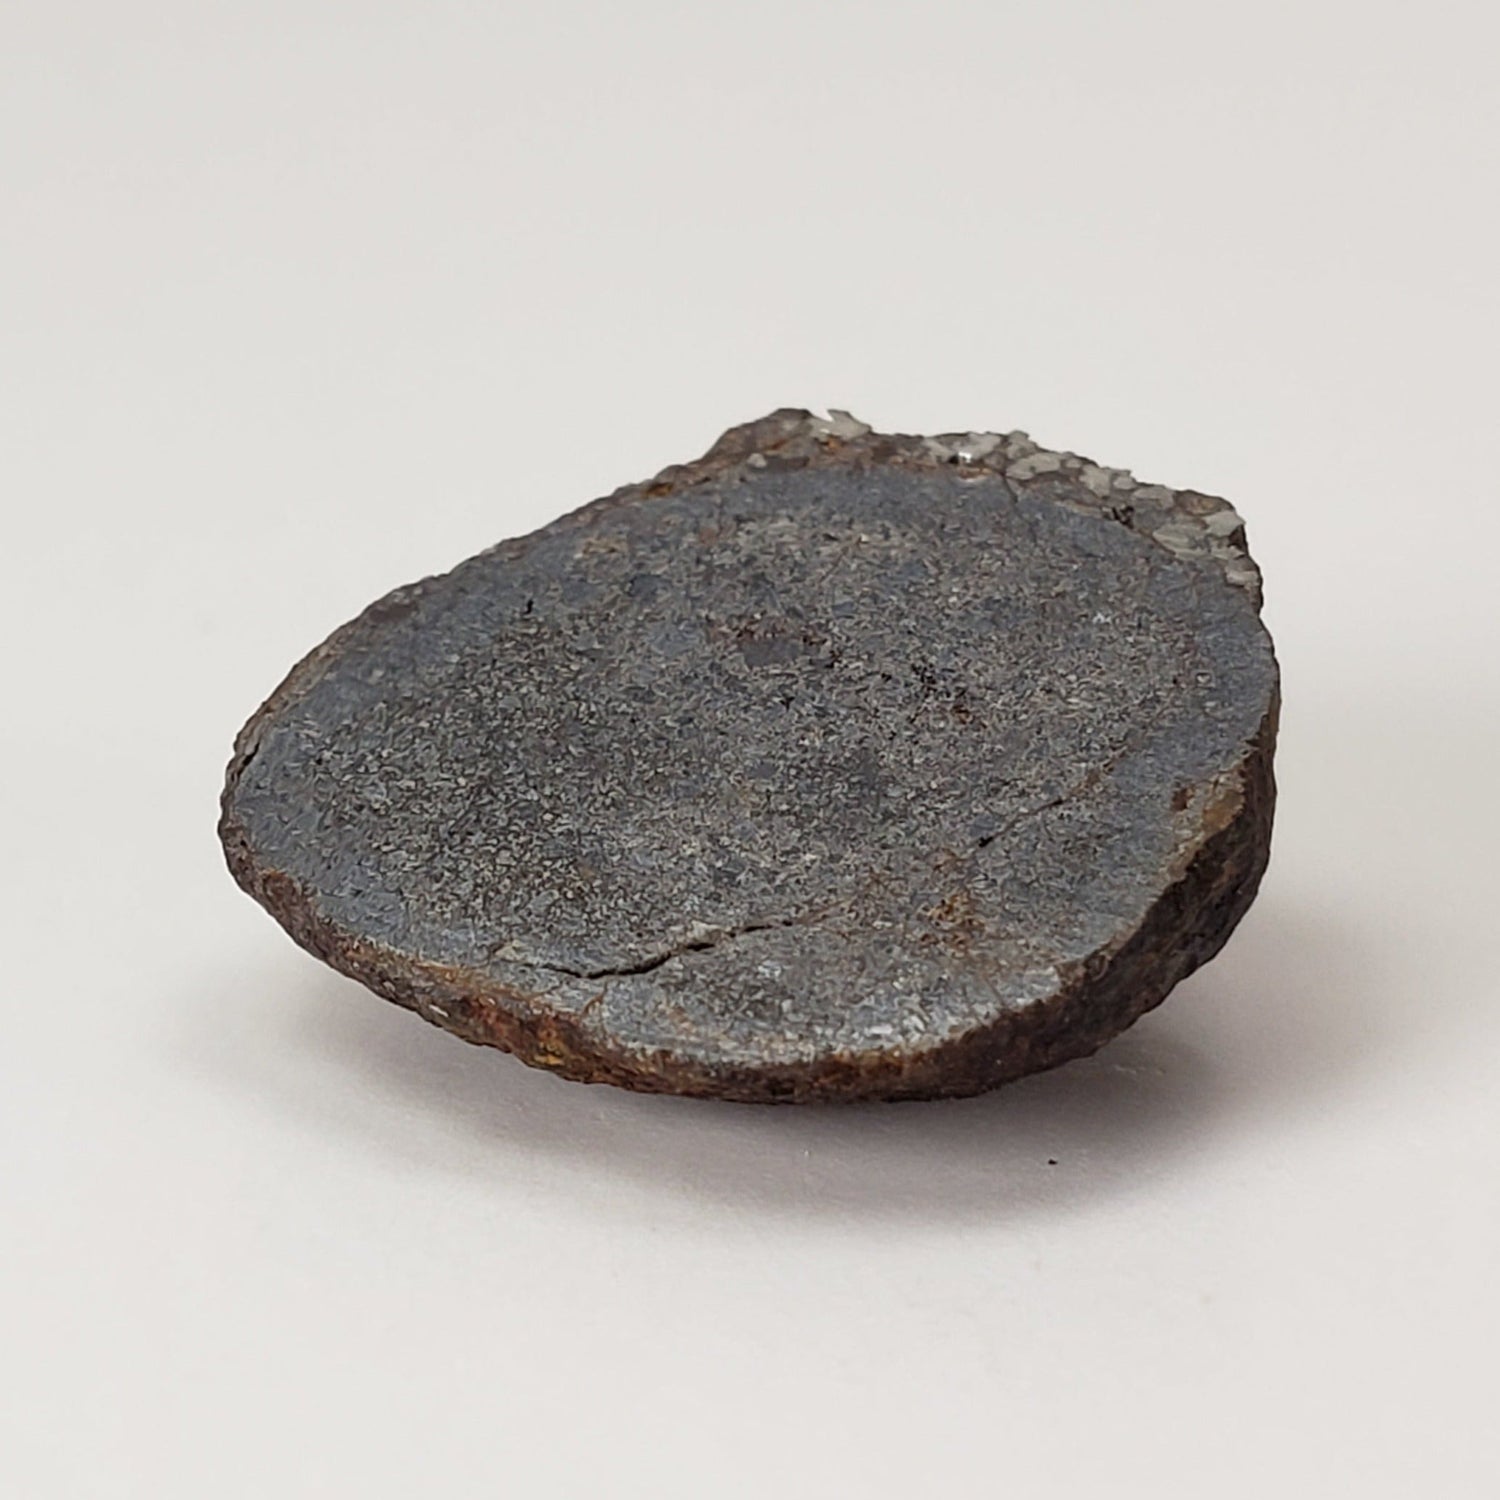 Vaca Muerta Meteorite | 2.76 Grams | End Cut | Mesosiderite A1 | Famous | Chile